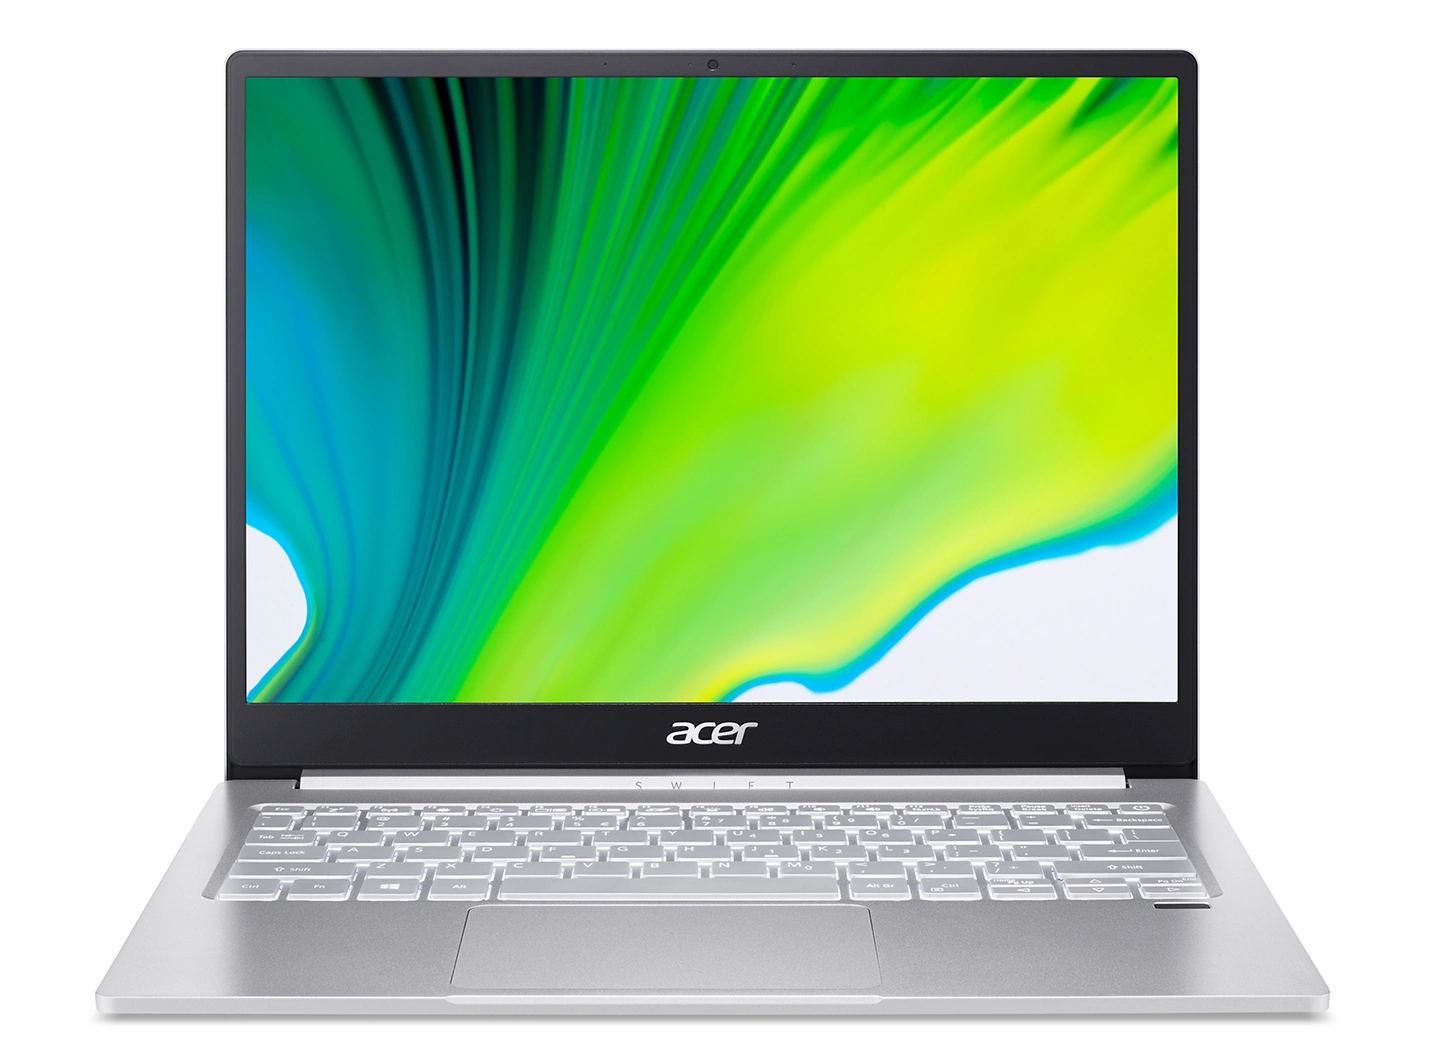 Acer Swift 3 Intel SF314-512 Notebook